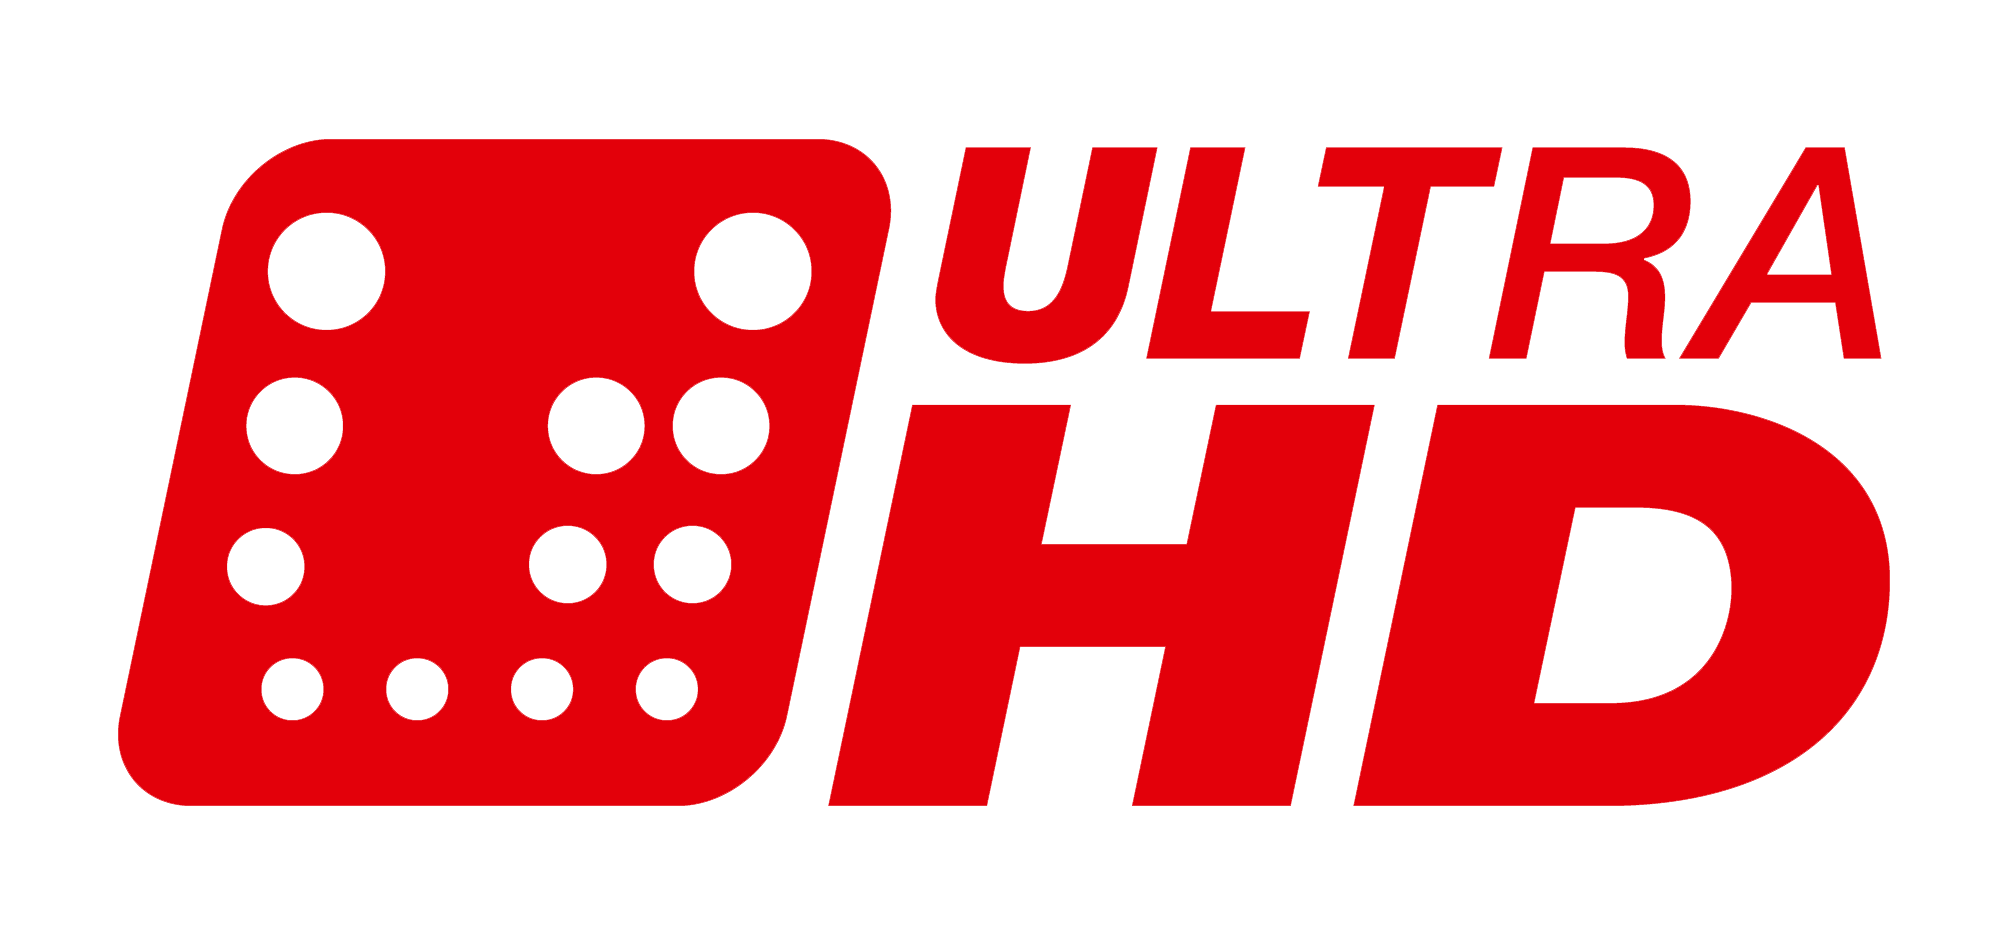 Поддержка UltraHD